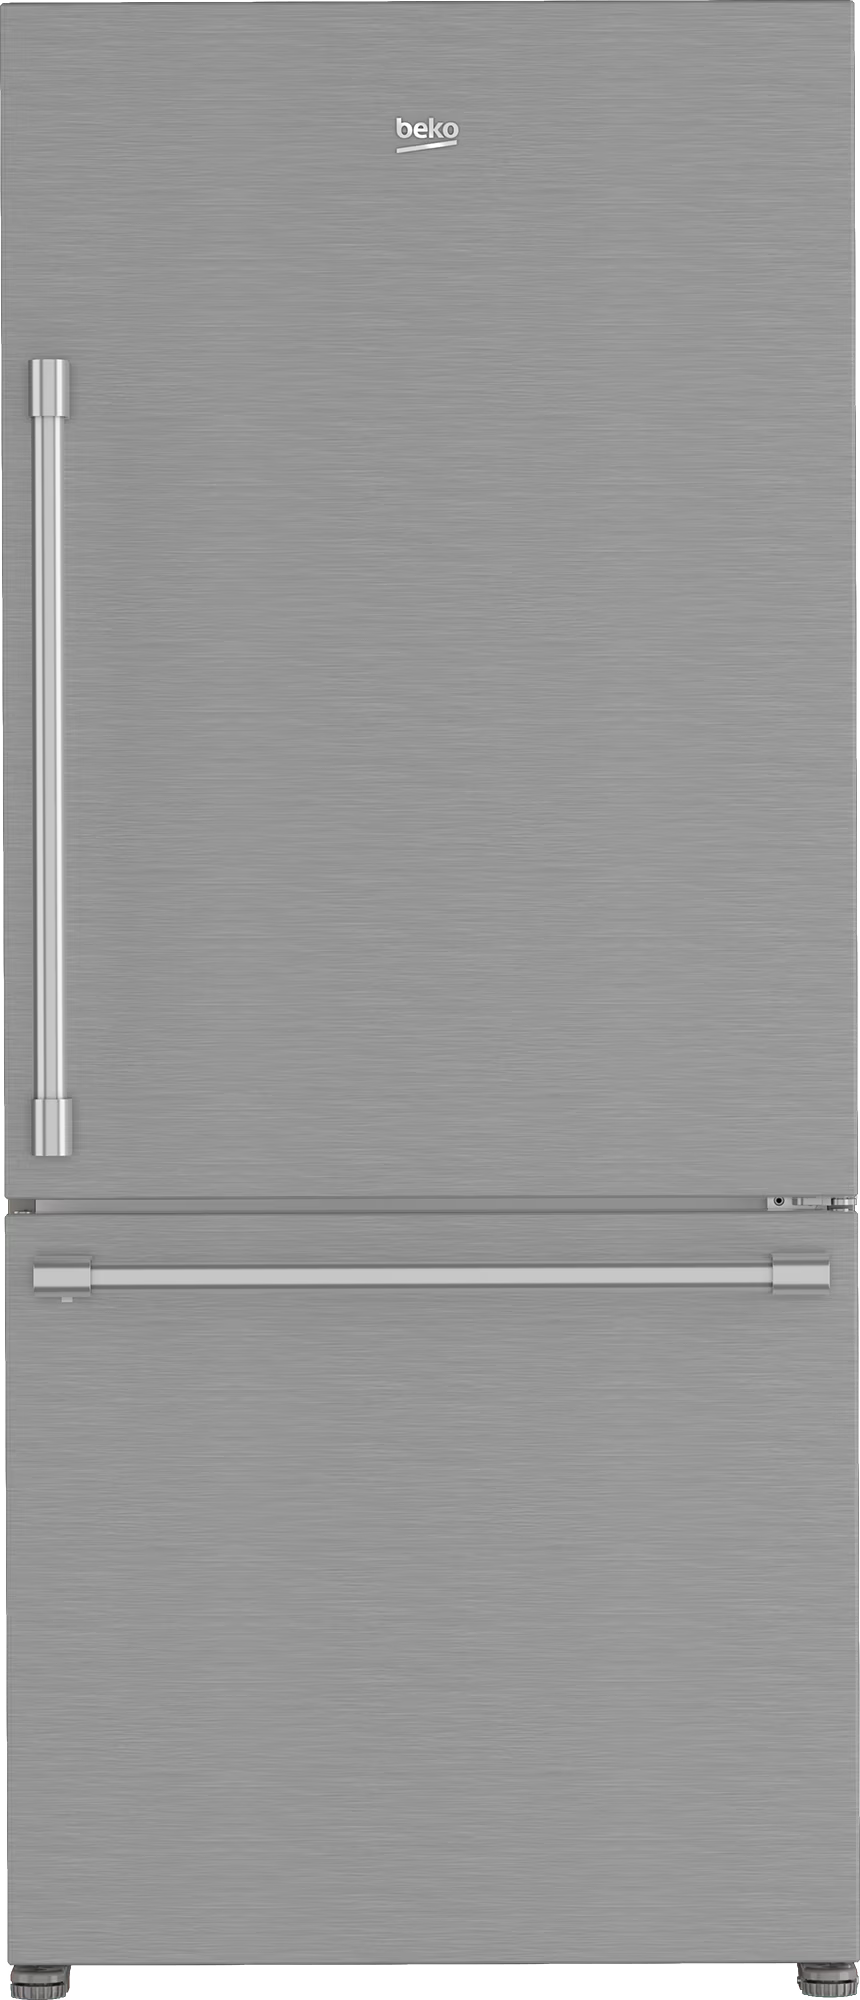 Beko 30 Inch 30 Counter Depth Bottom Freezer Refrigerator BFBD30216SS